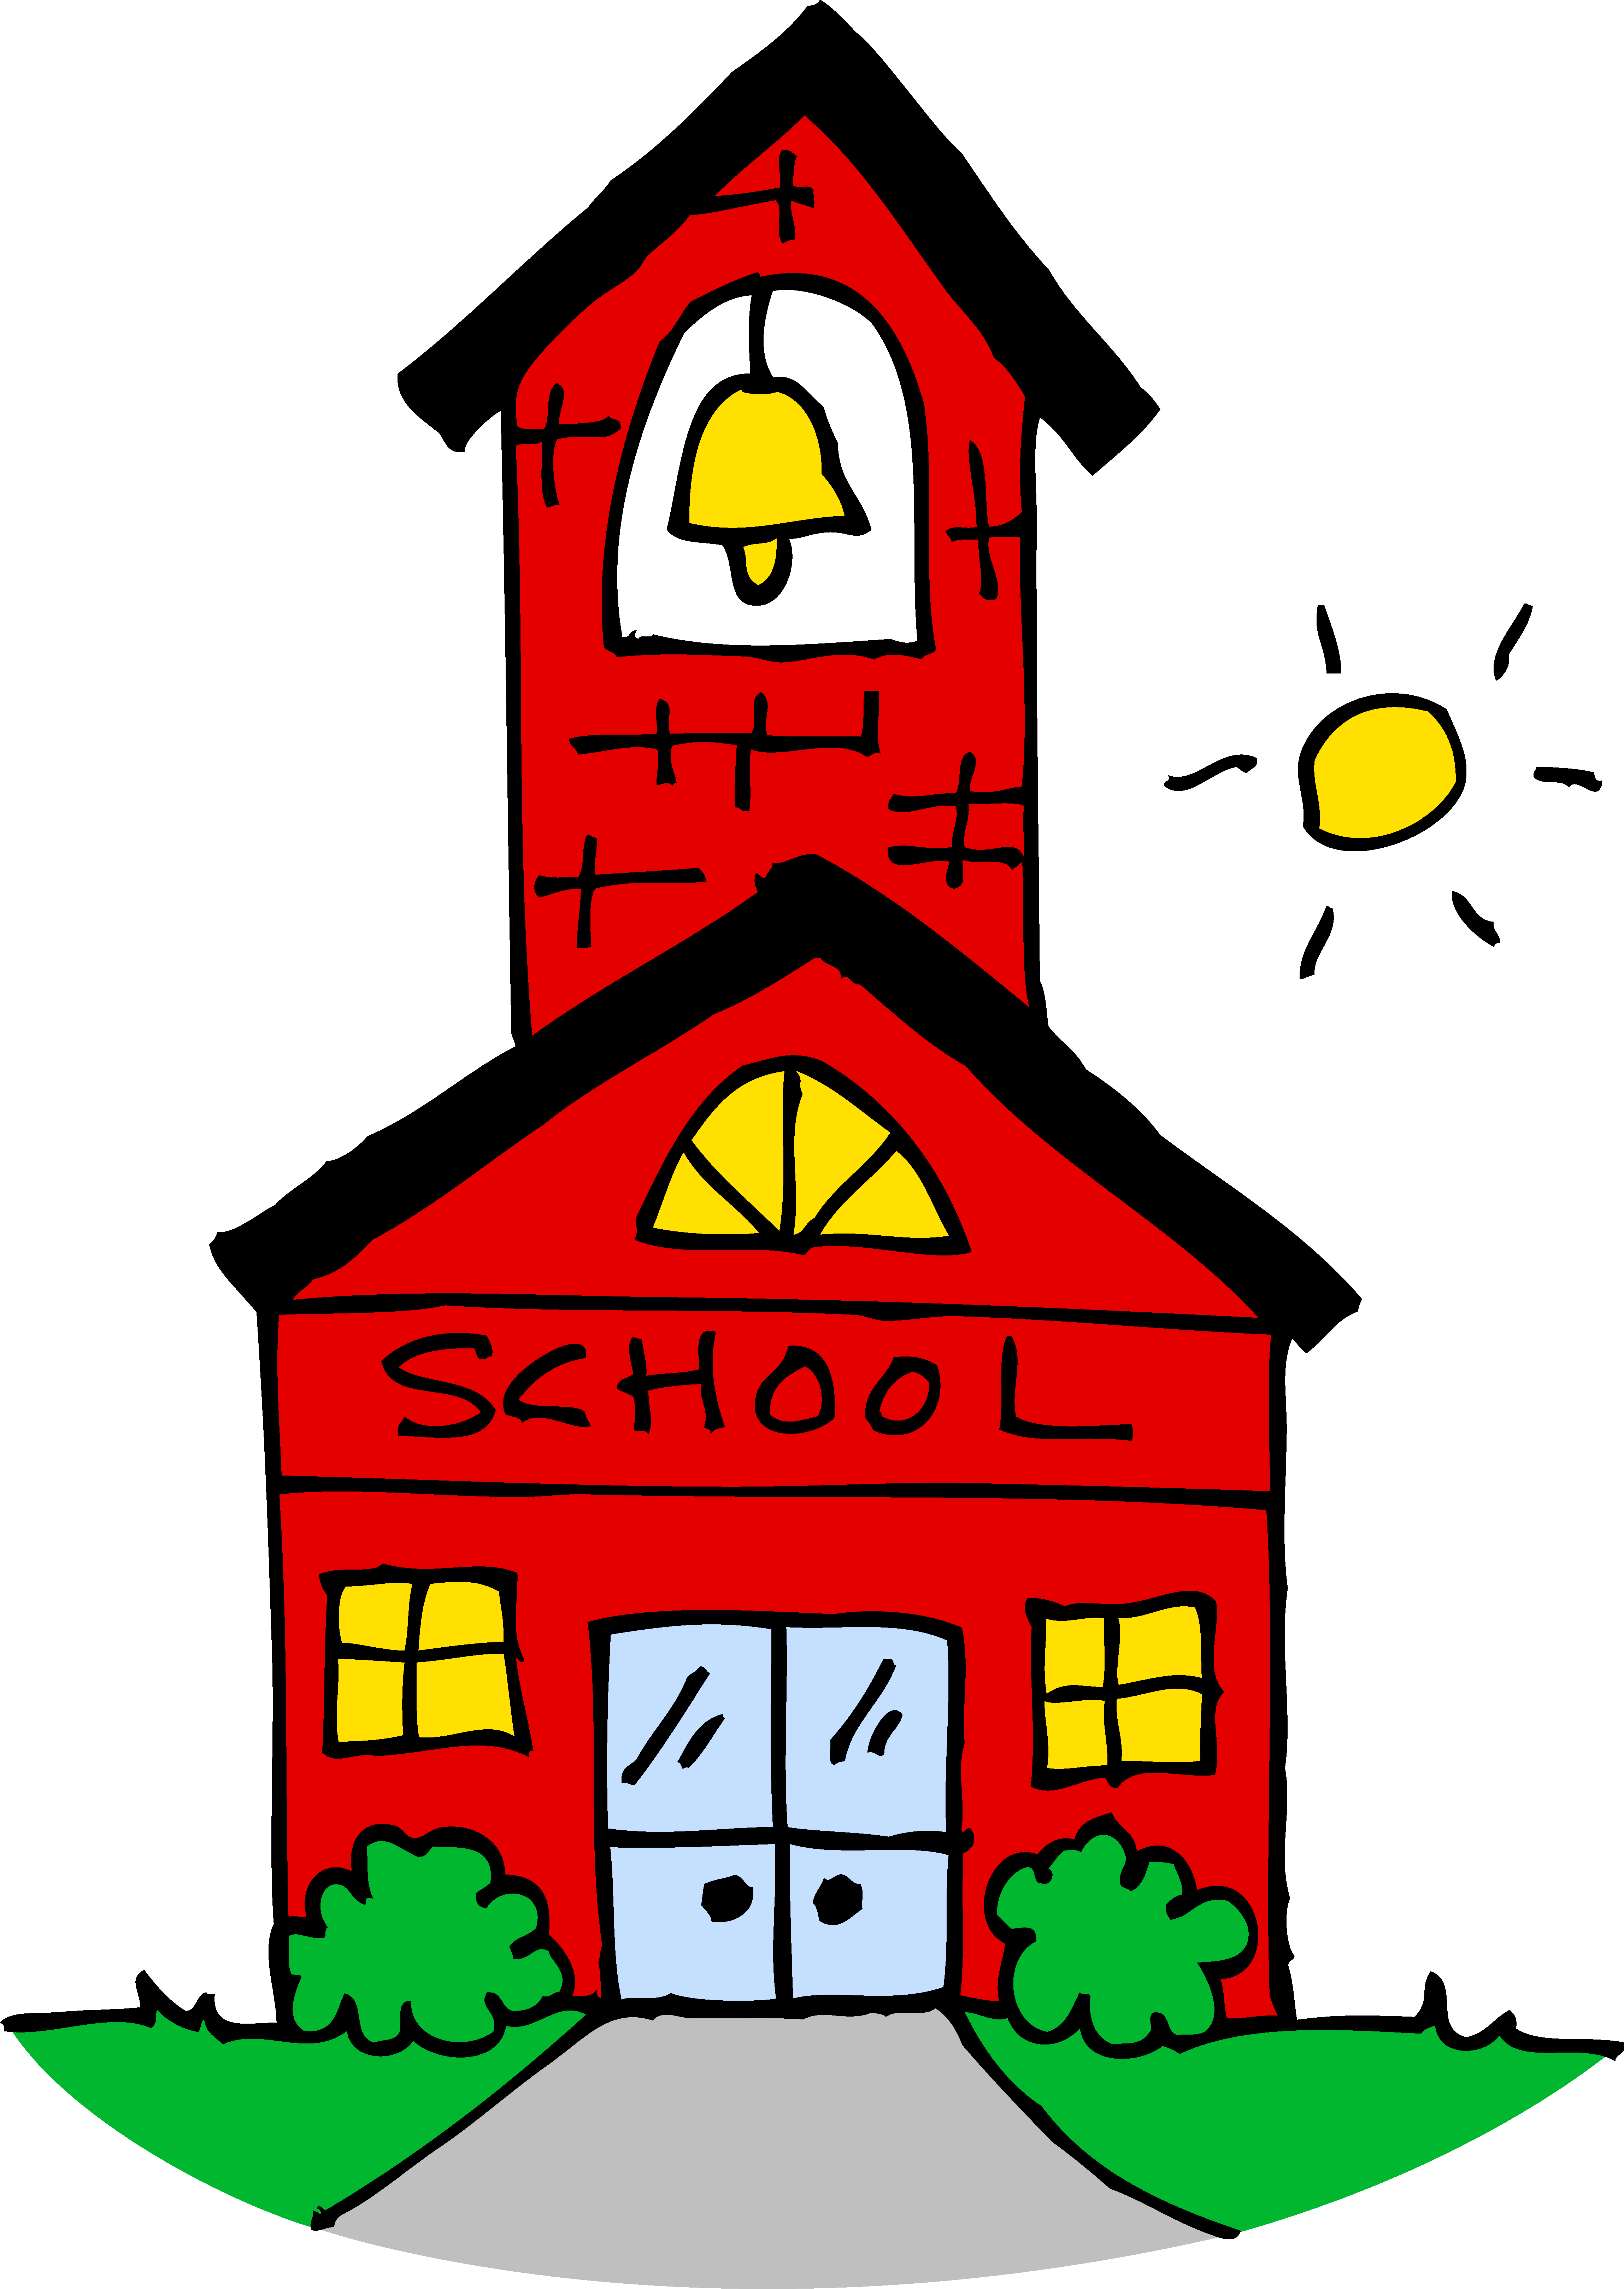 School house clip art free